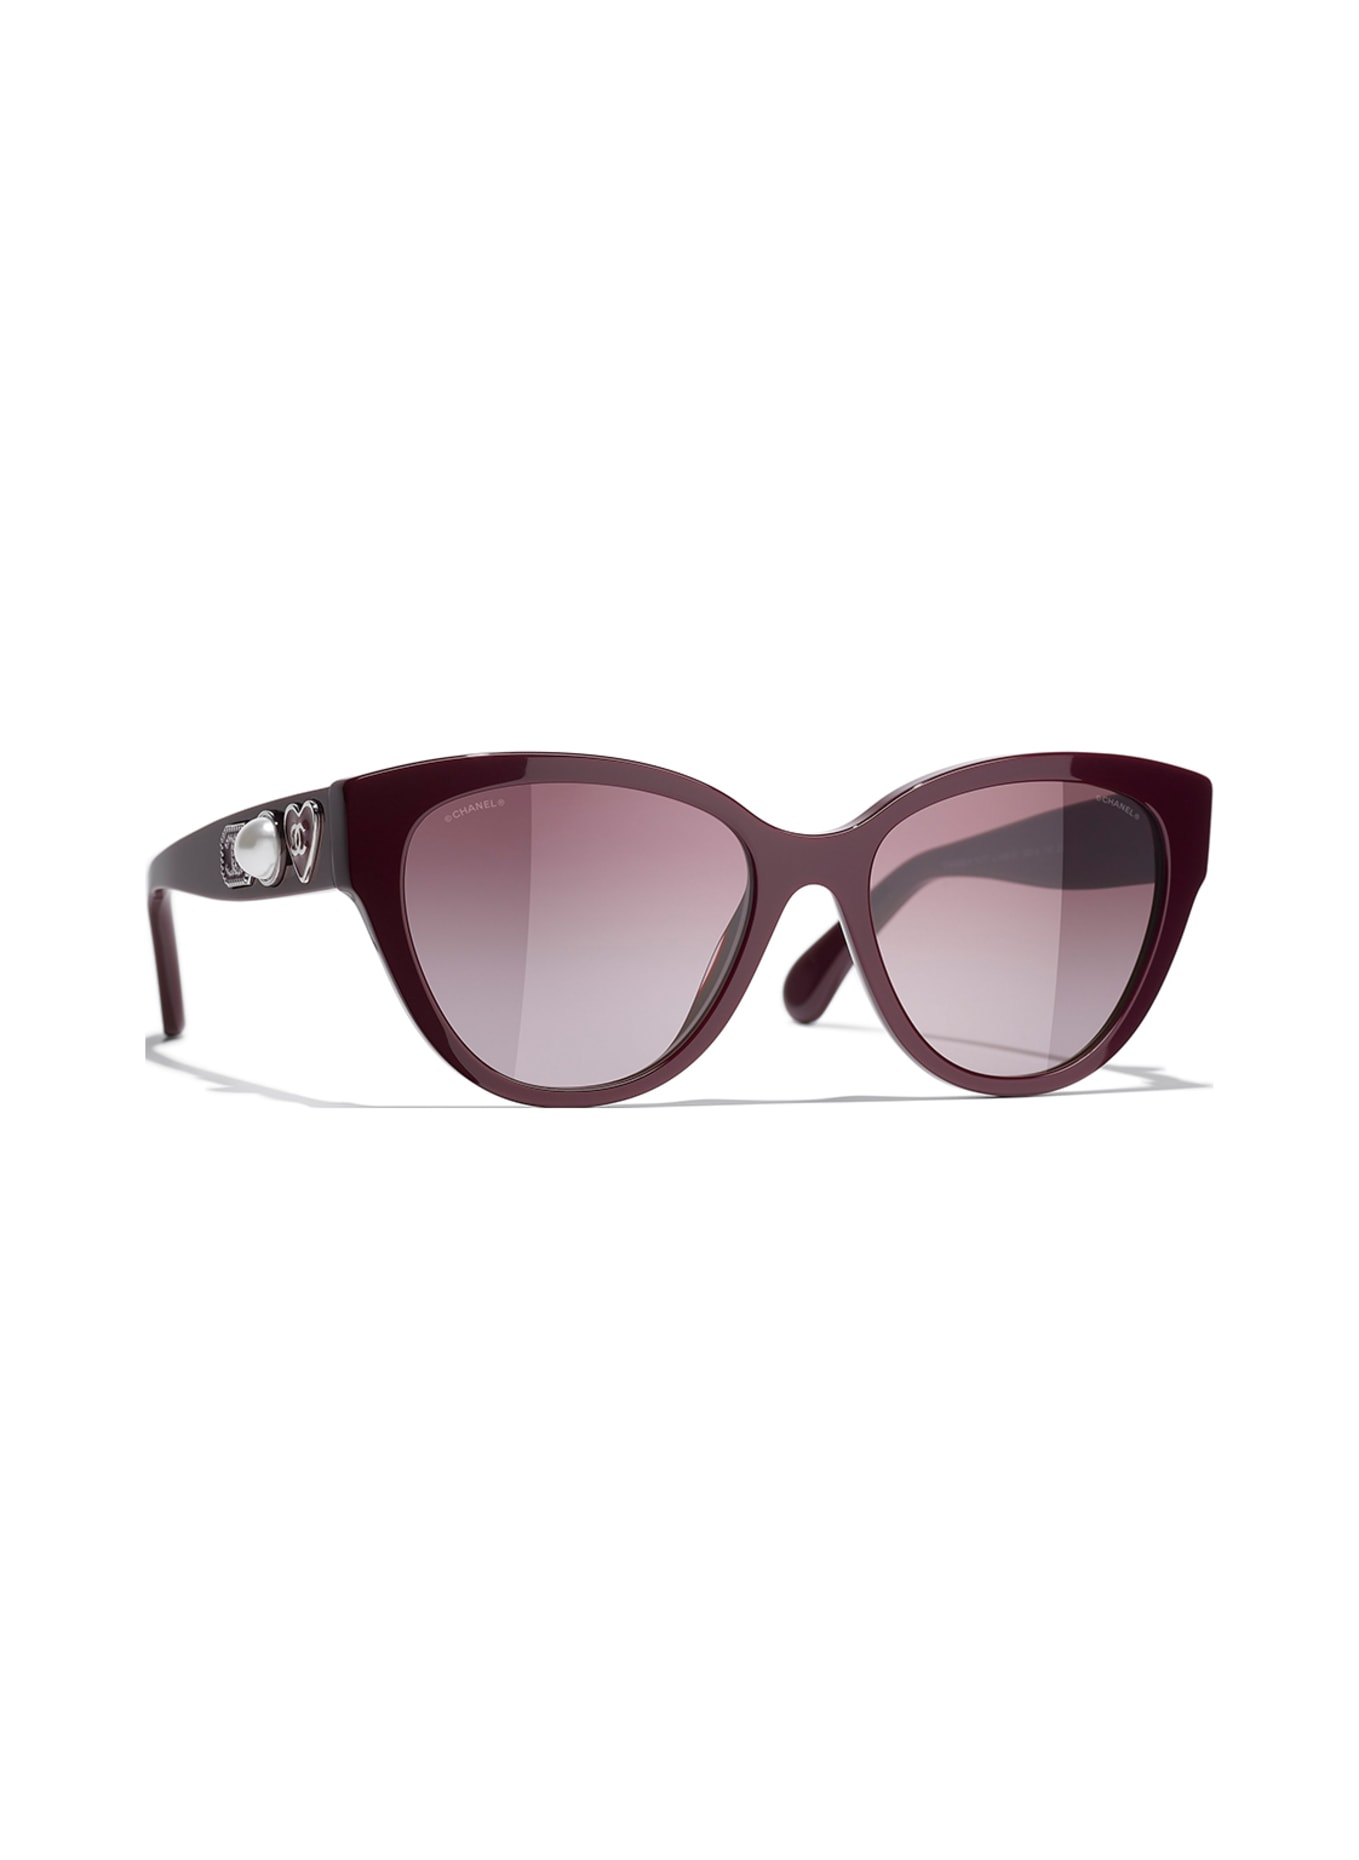 Chanel 5414 C534/3 Sunglasses Butterfly Sunglasses Black